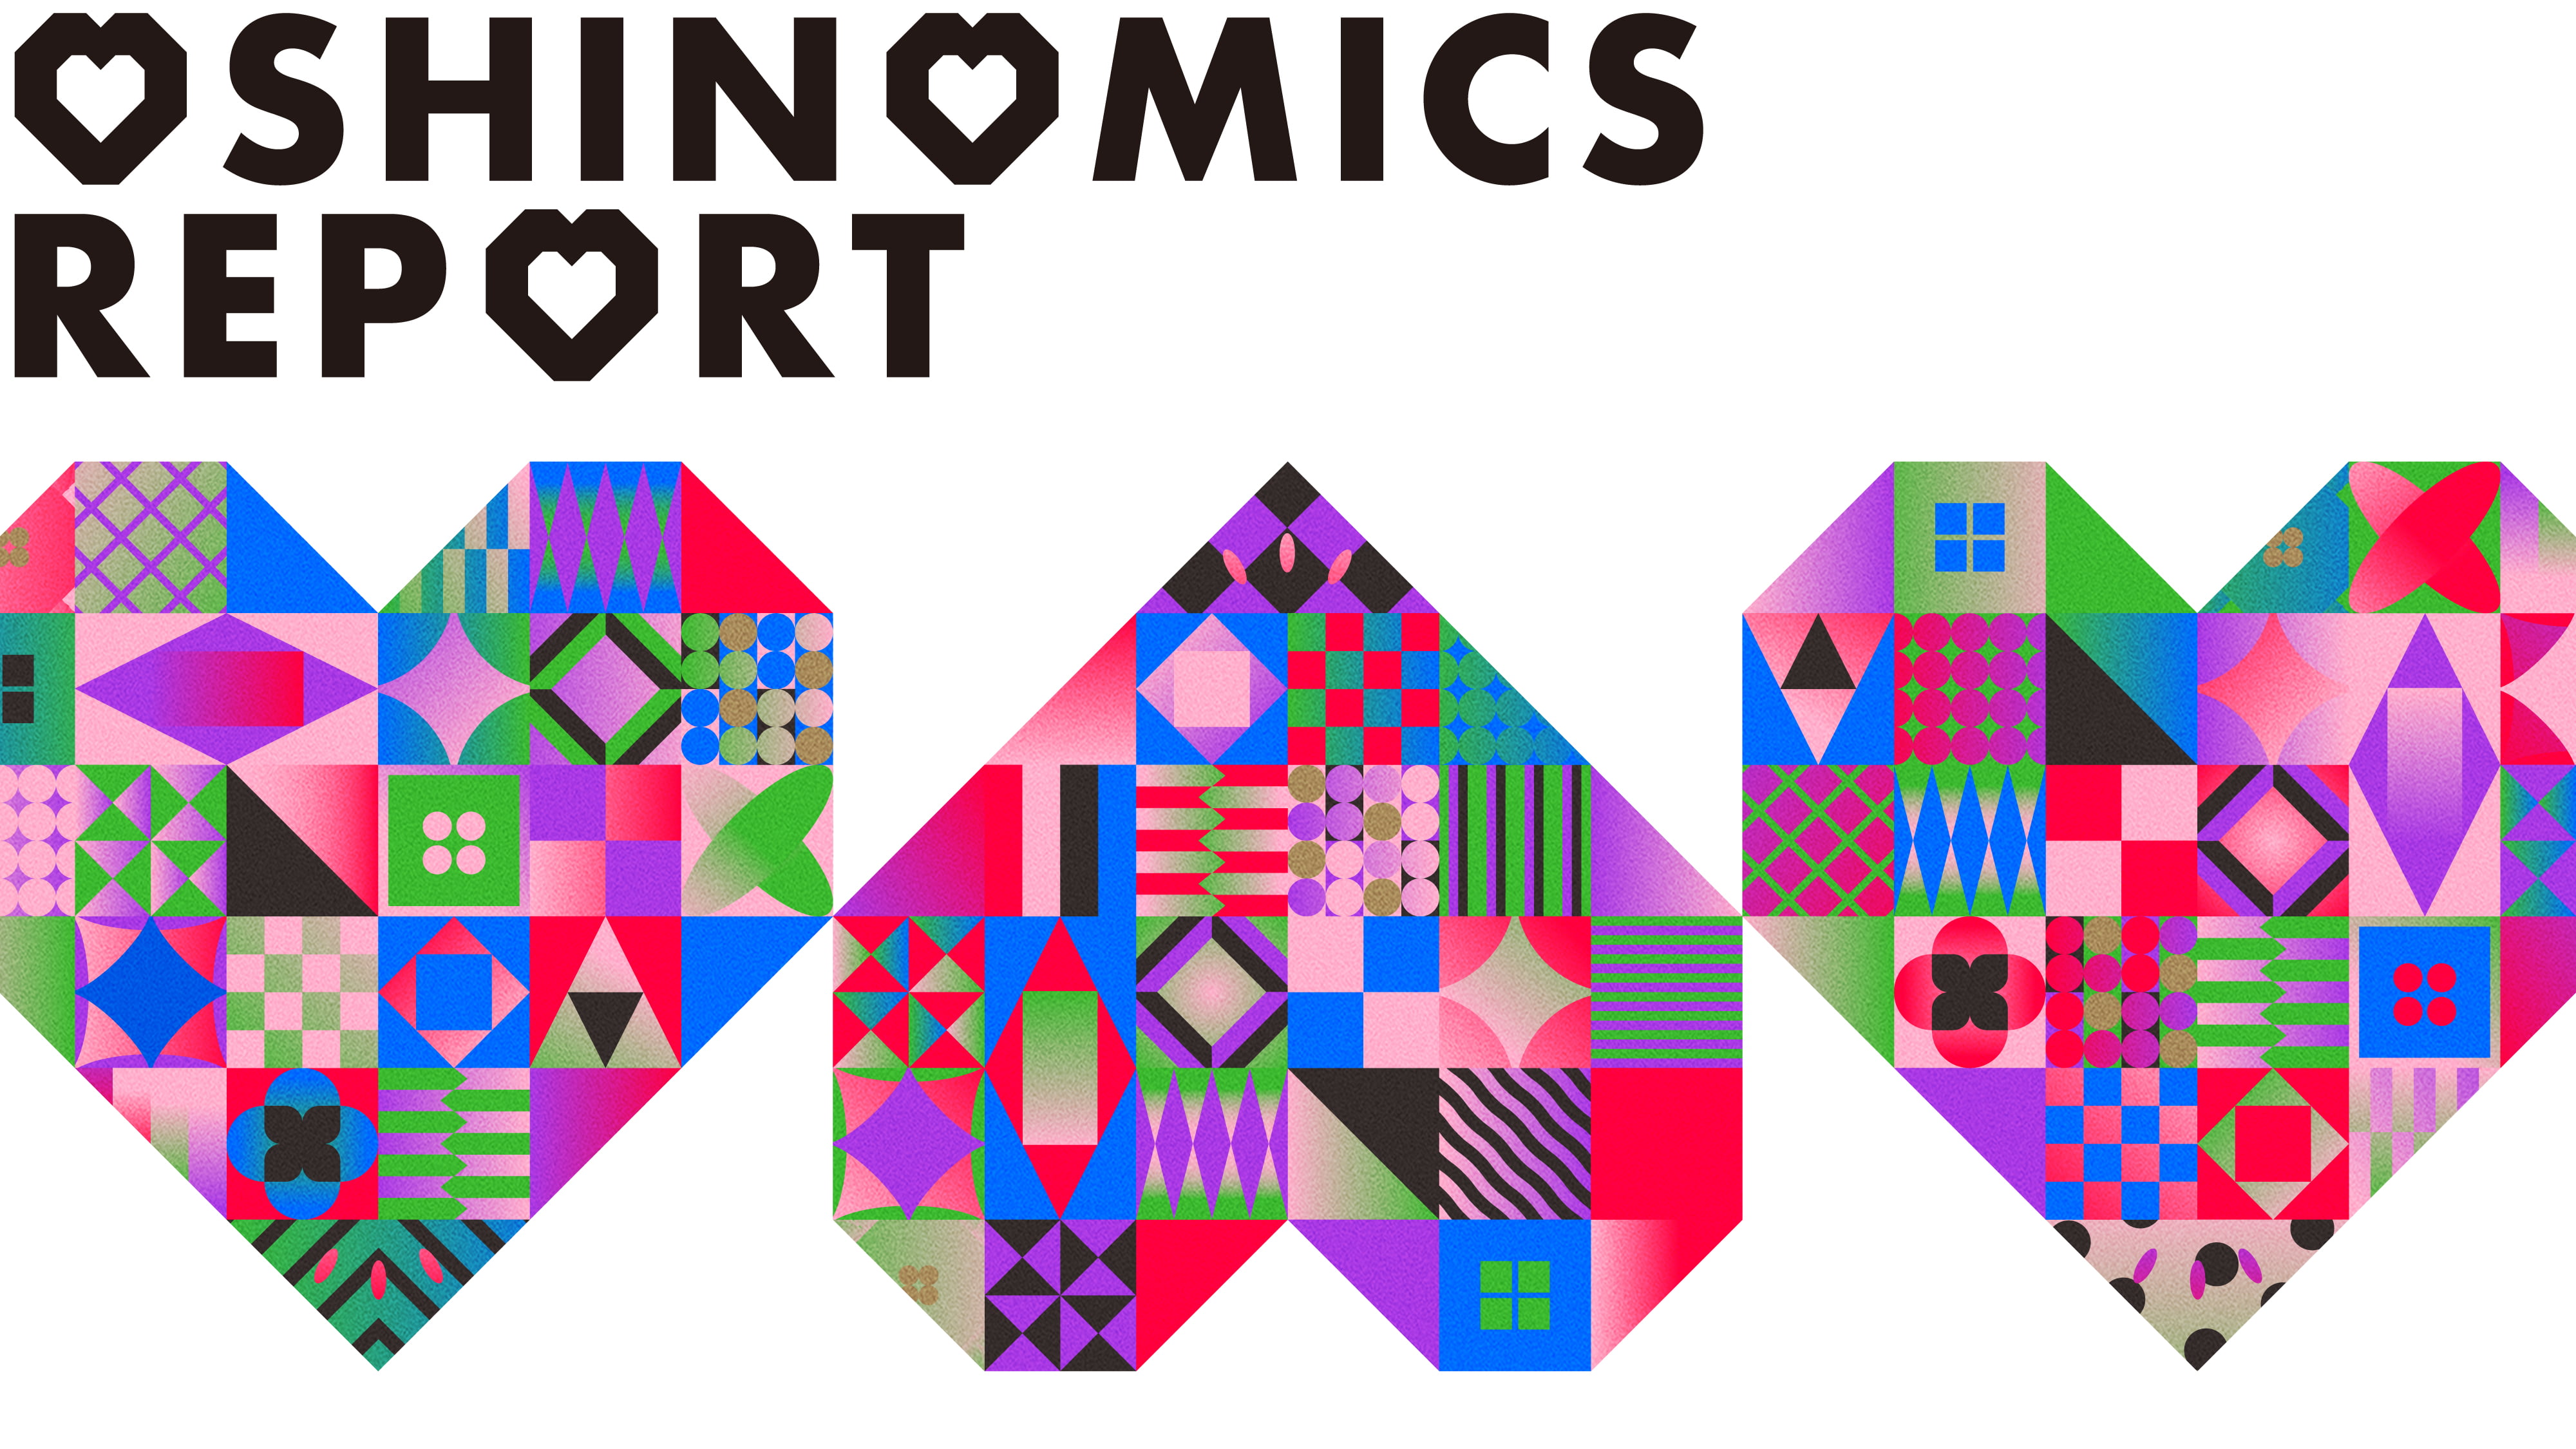 OSHINOMICS REPORTを公開しました。
